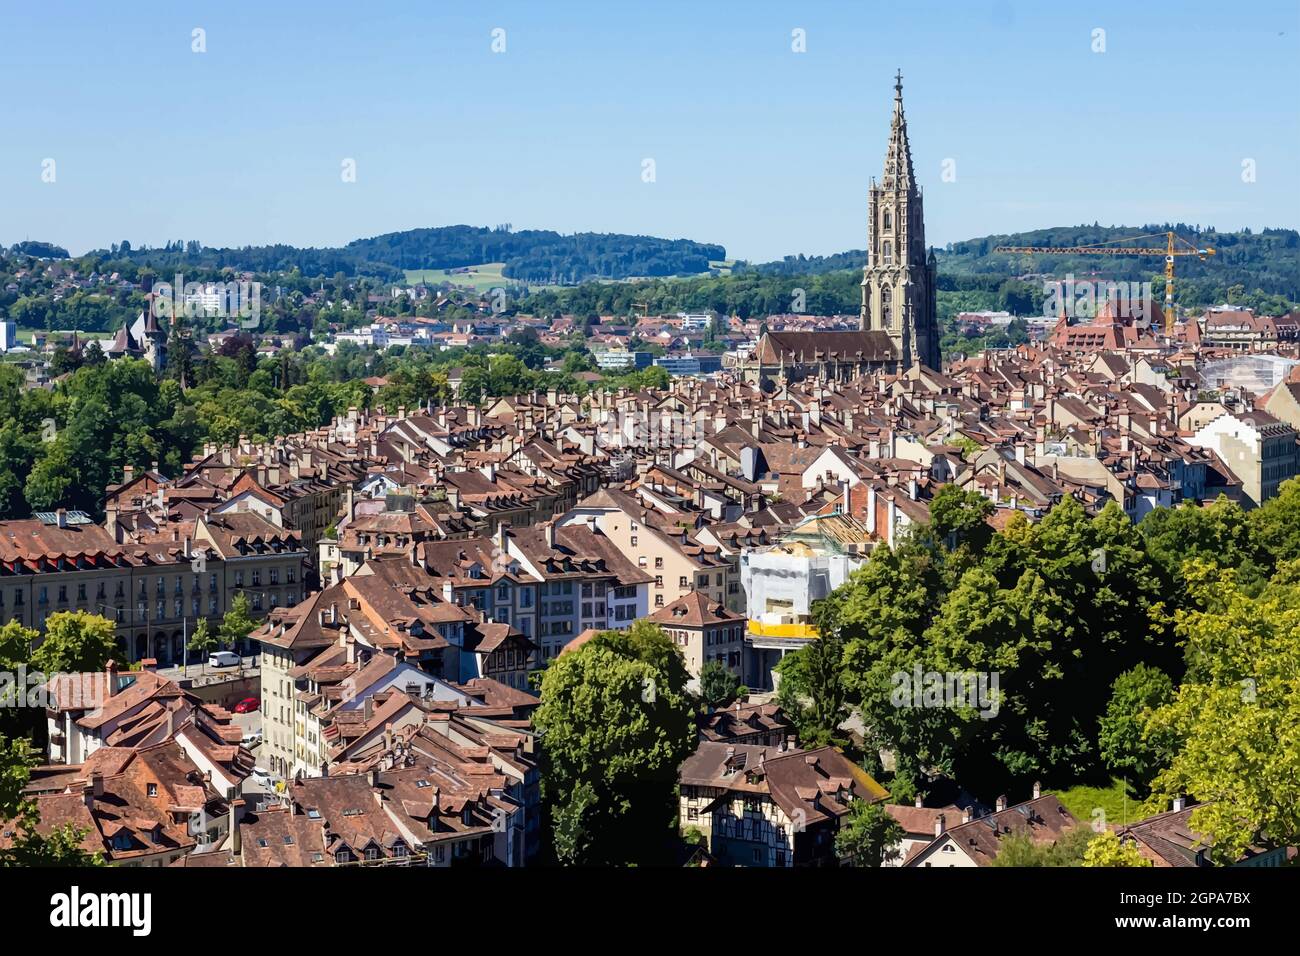 Große Stadt Europa Schweiz historische Gebäude Stock-Vektorgrafik - Alamy